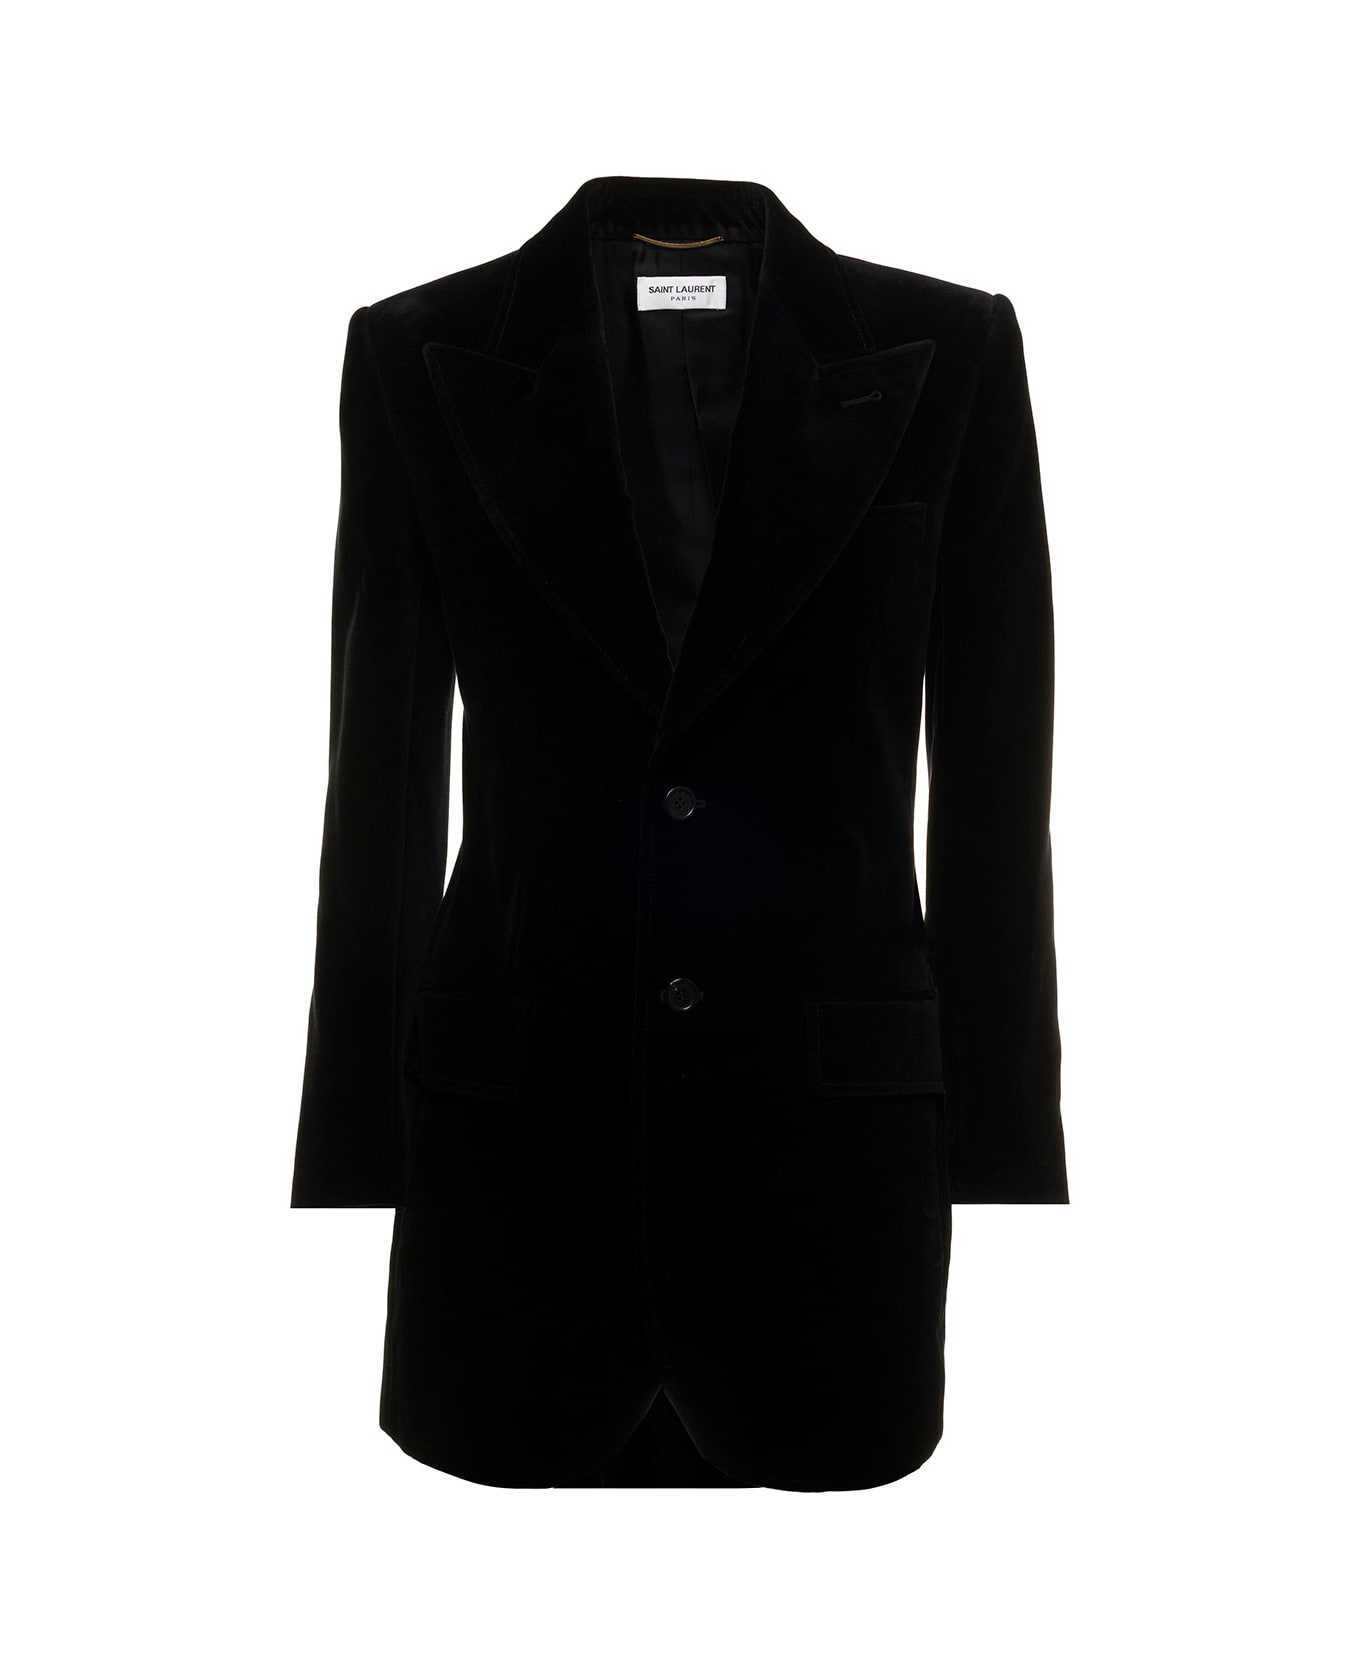 Saint Laurent Hourglass Blazer In Cotton Velor Saint Lurent Woman - Black コート